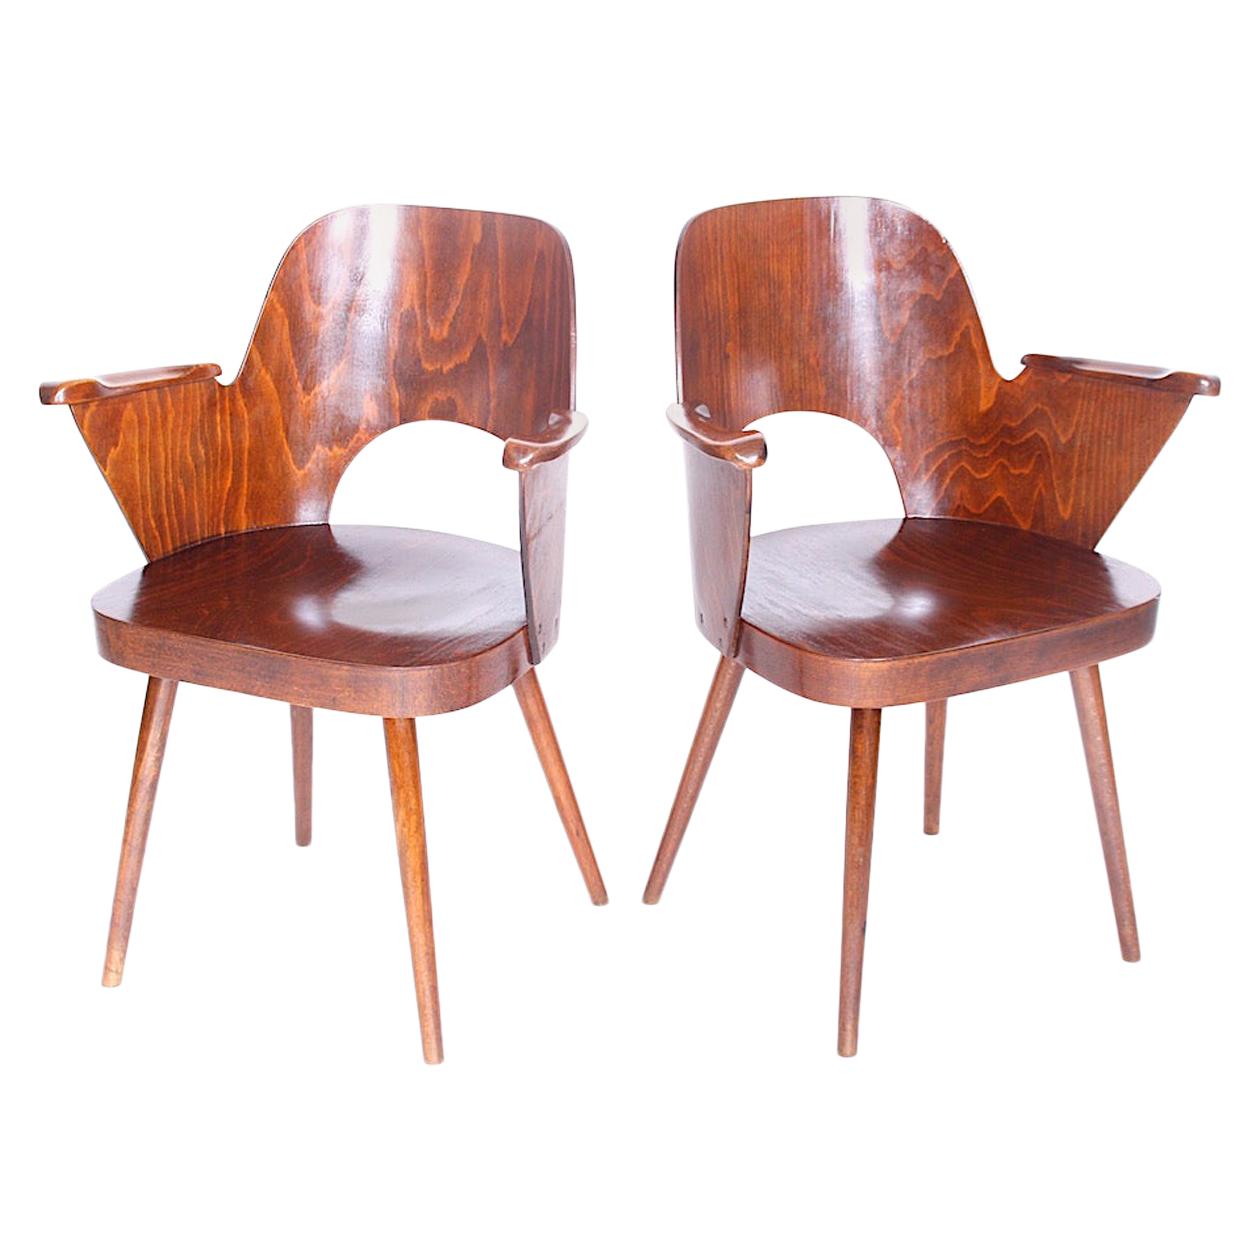 Pair of Wood Armchairs Designed by Oswald Haerdtl